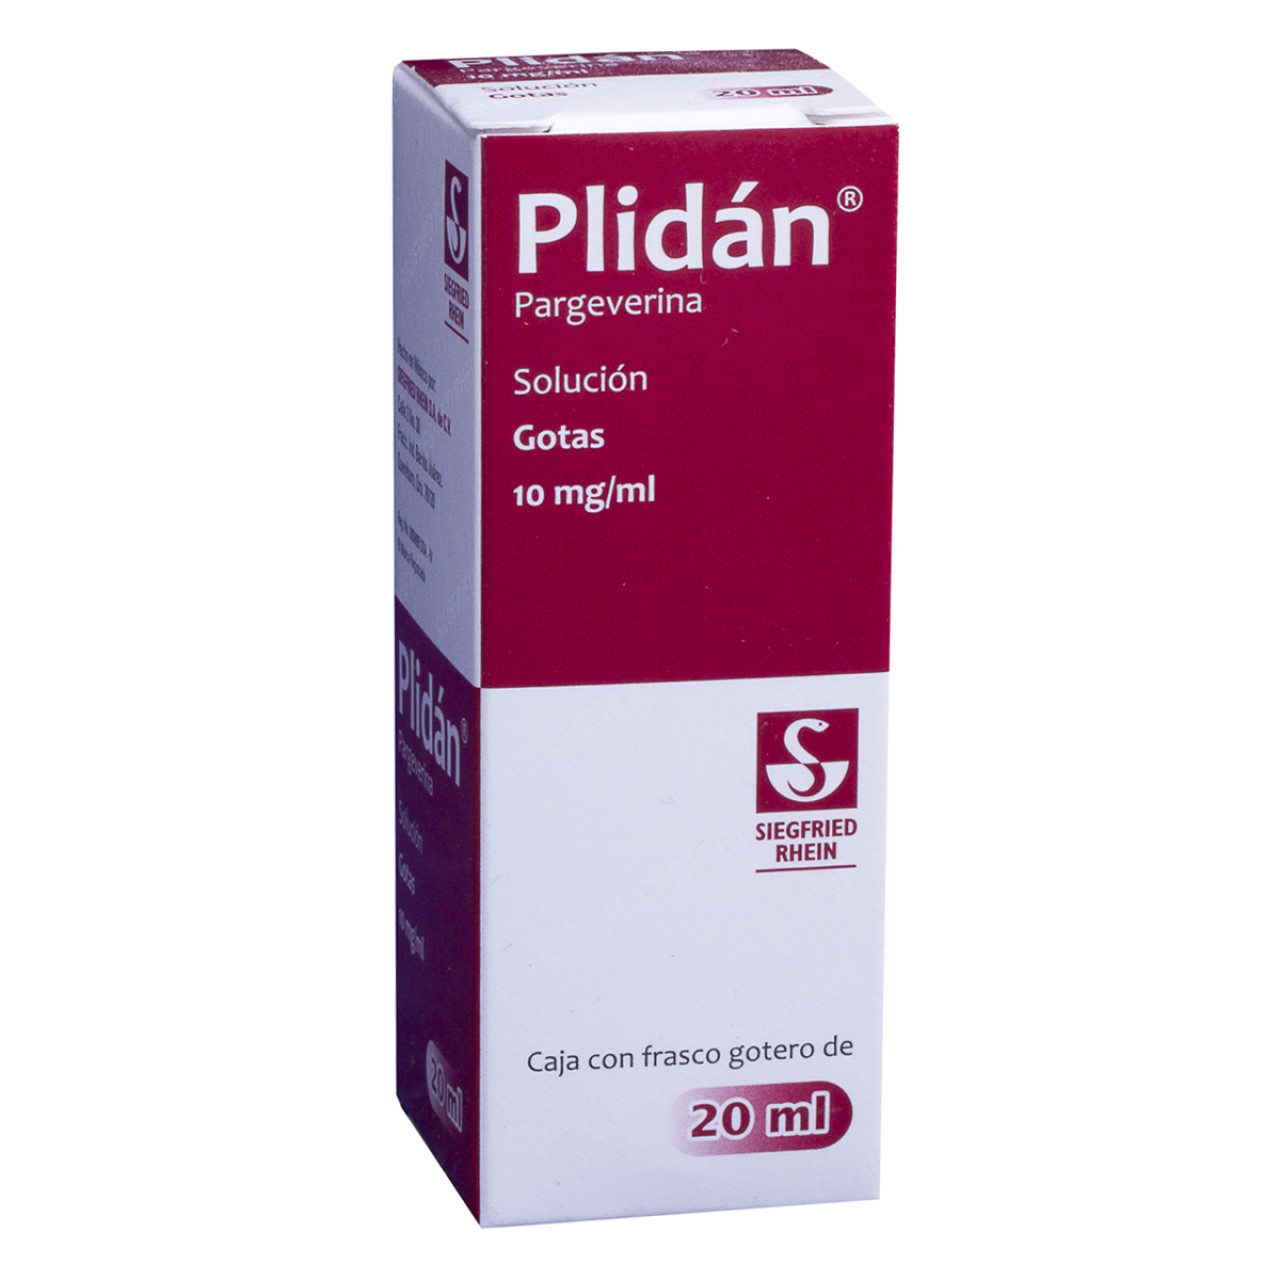 Plidan - image 0